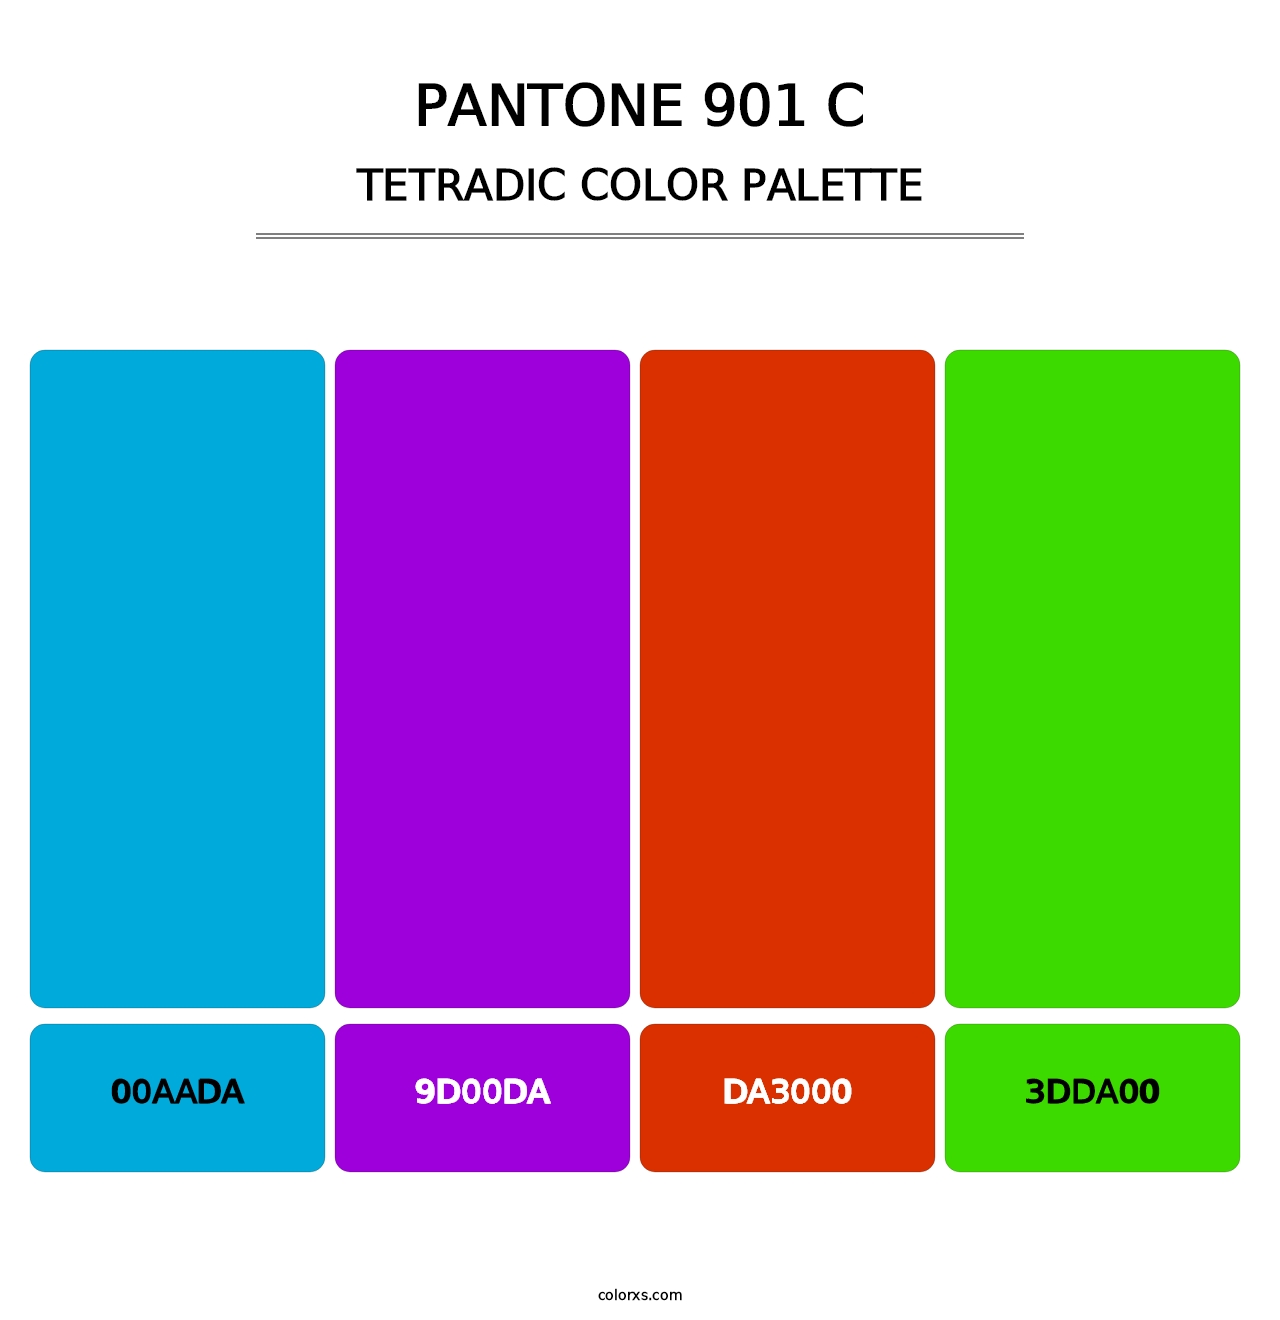 PANTONE 901 C - Tetradic Color Palette